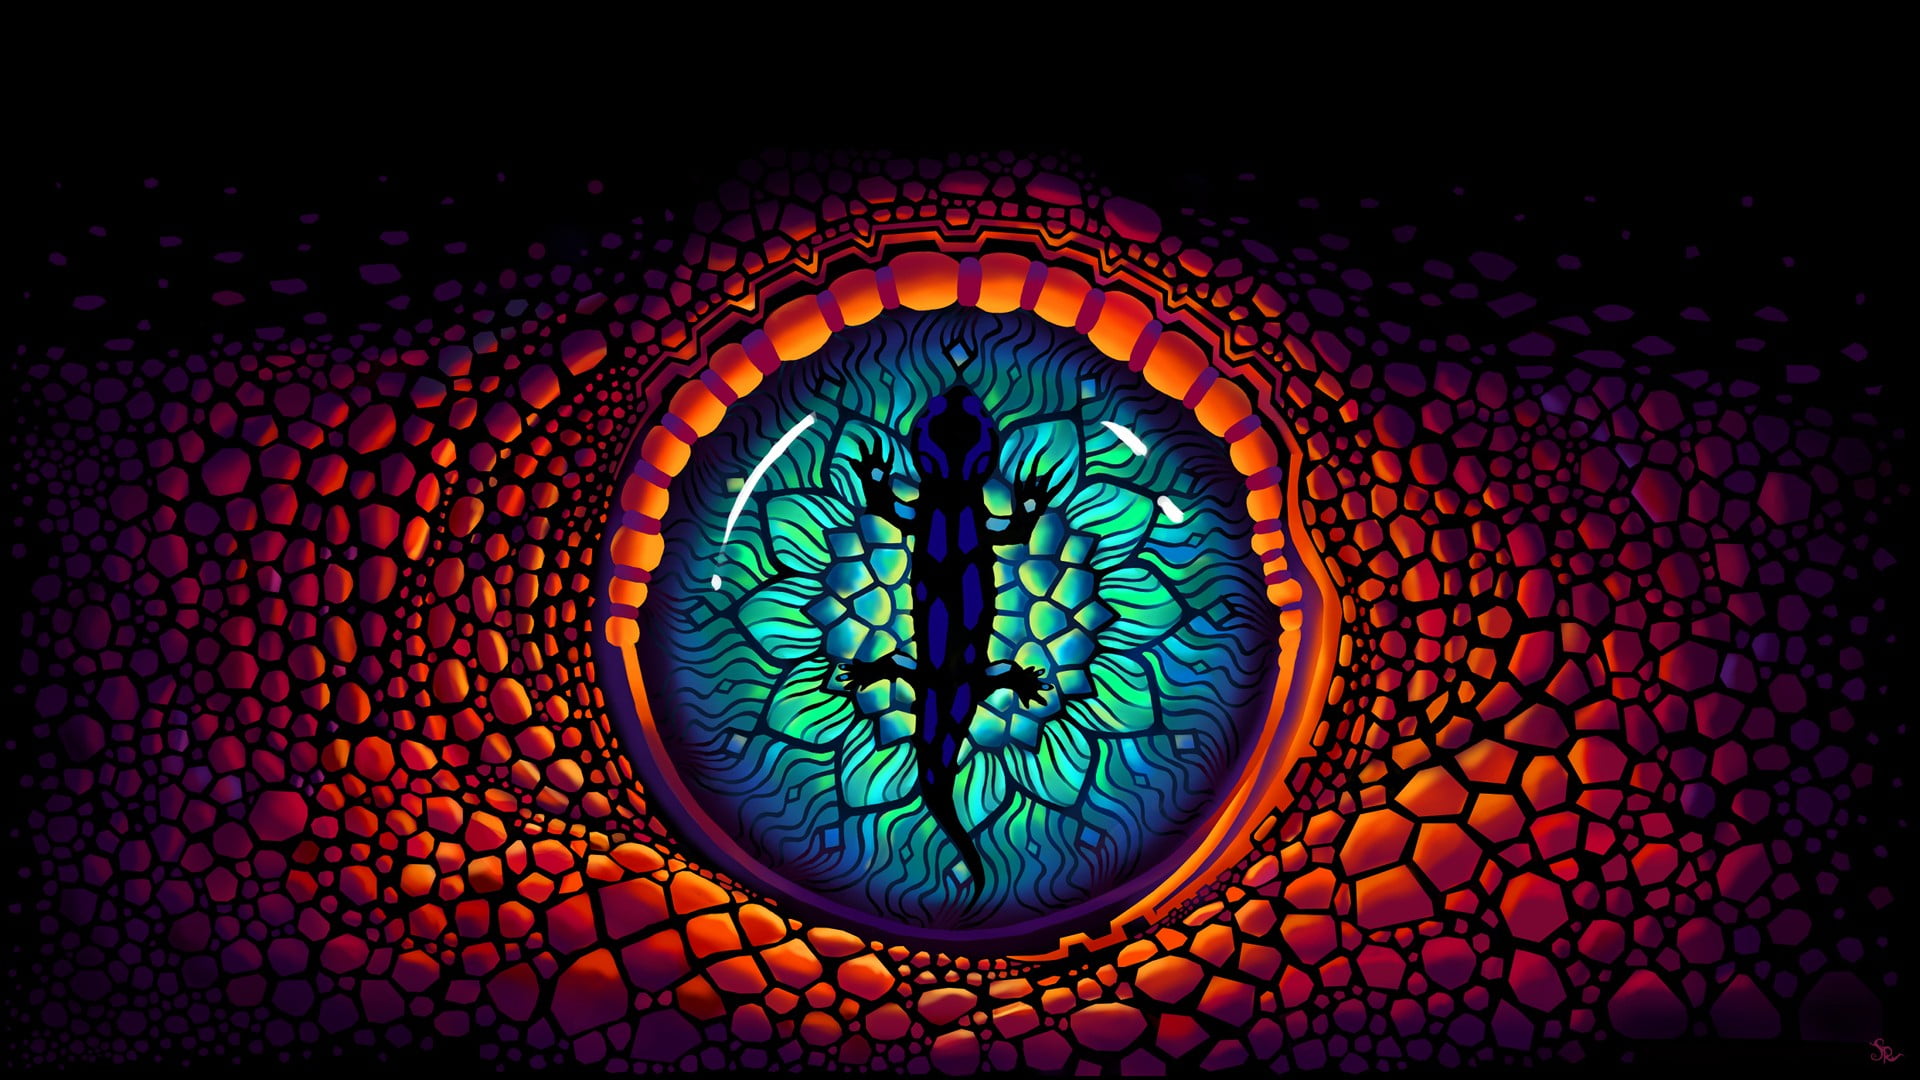 blue, green, and orange reptile eye optical illusion illustration